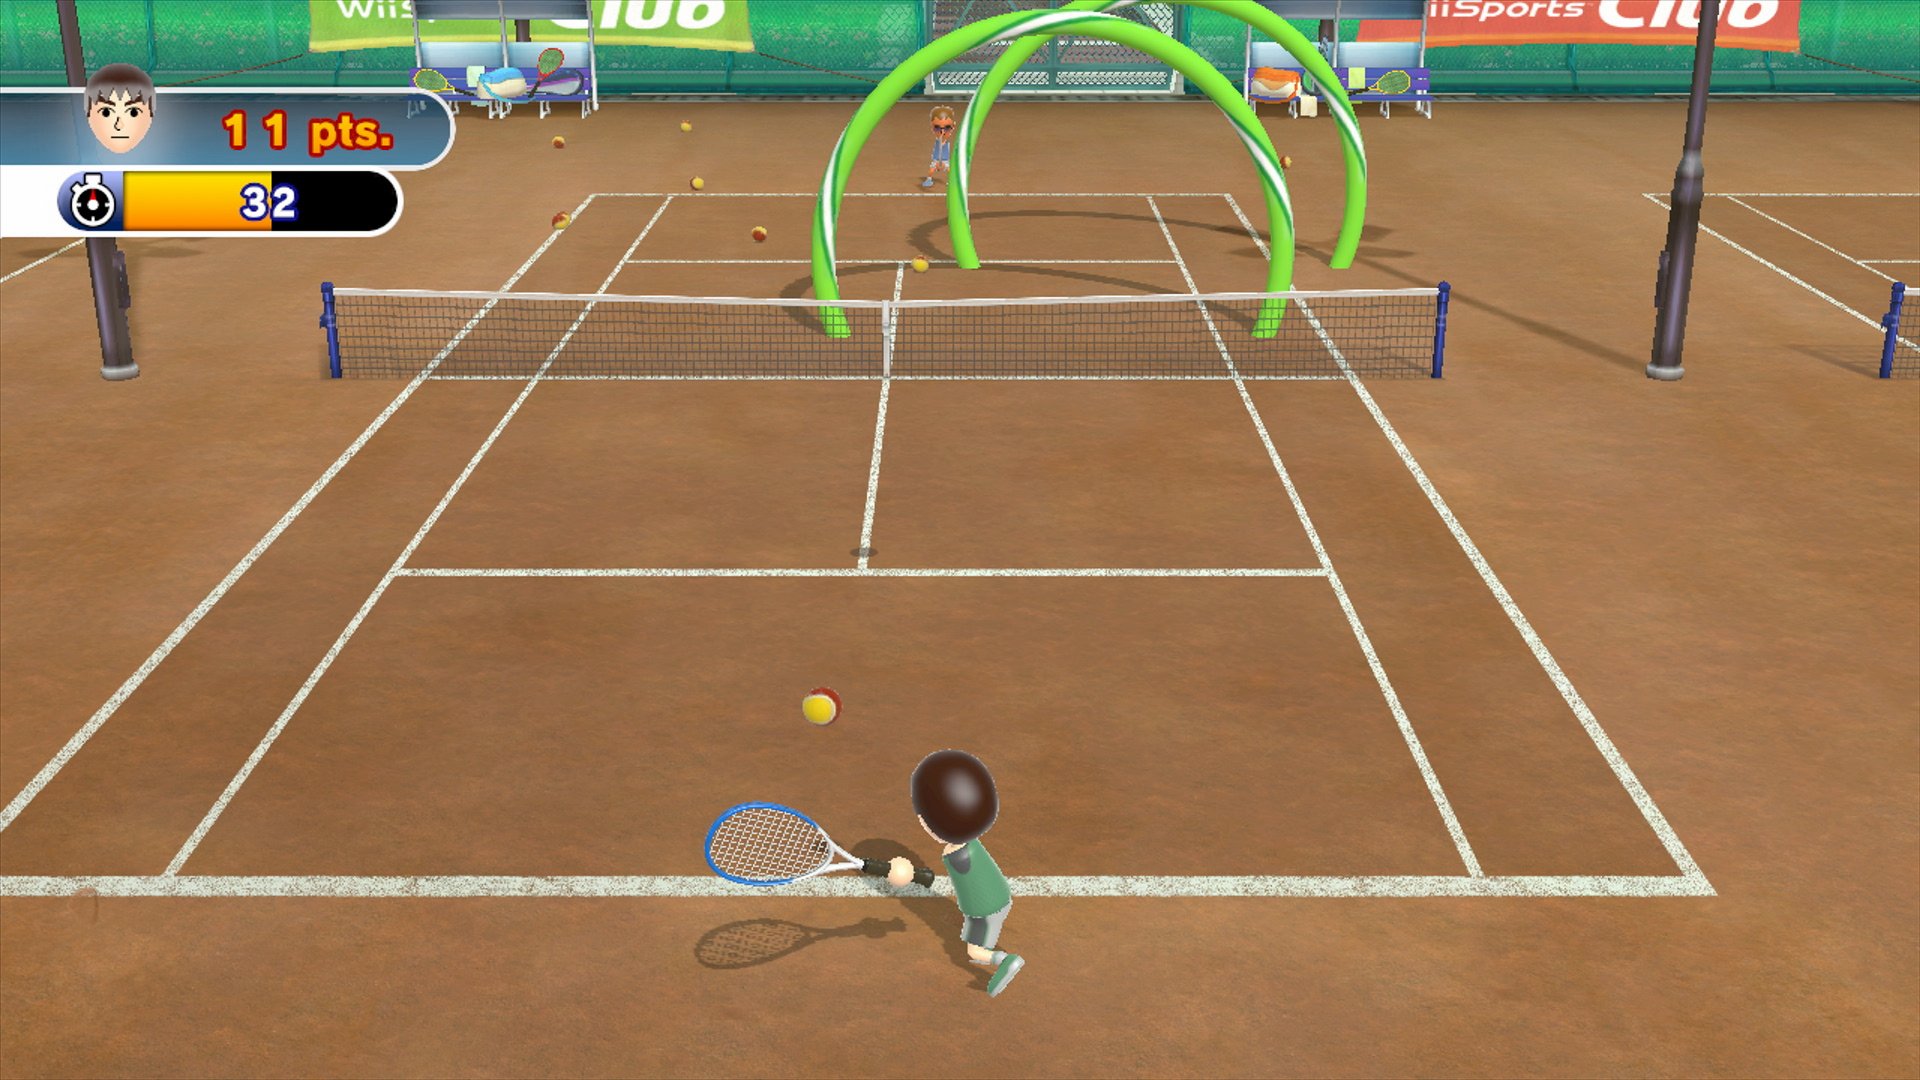 Wii Sports Club: Tennis Review (Wii U eShop)